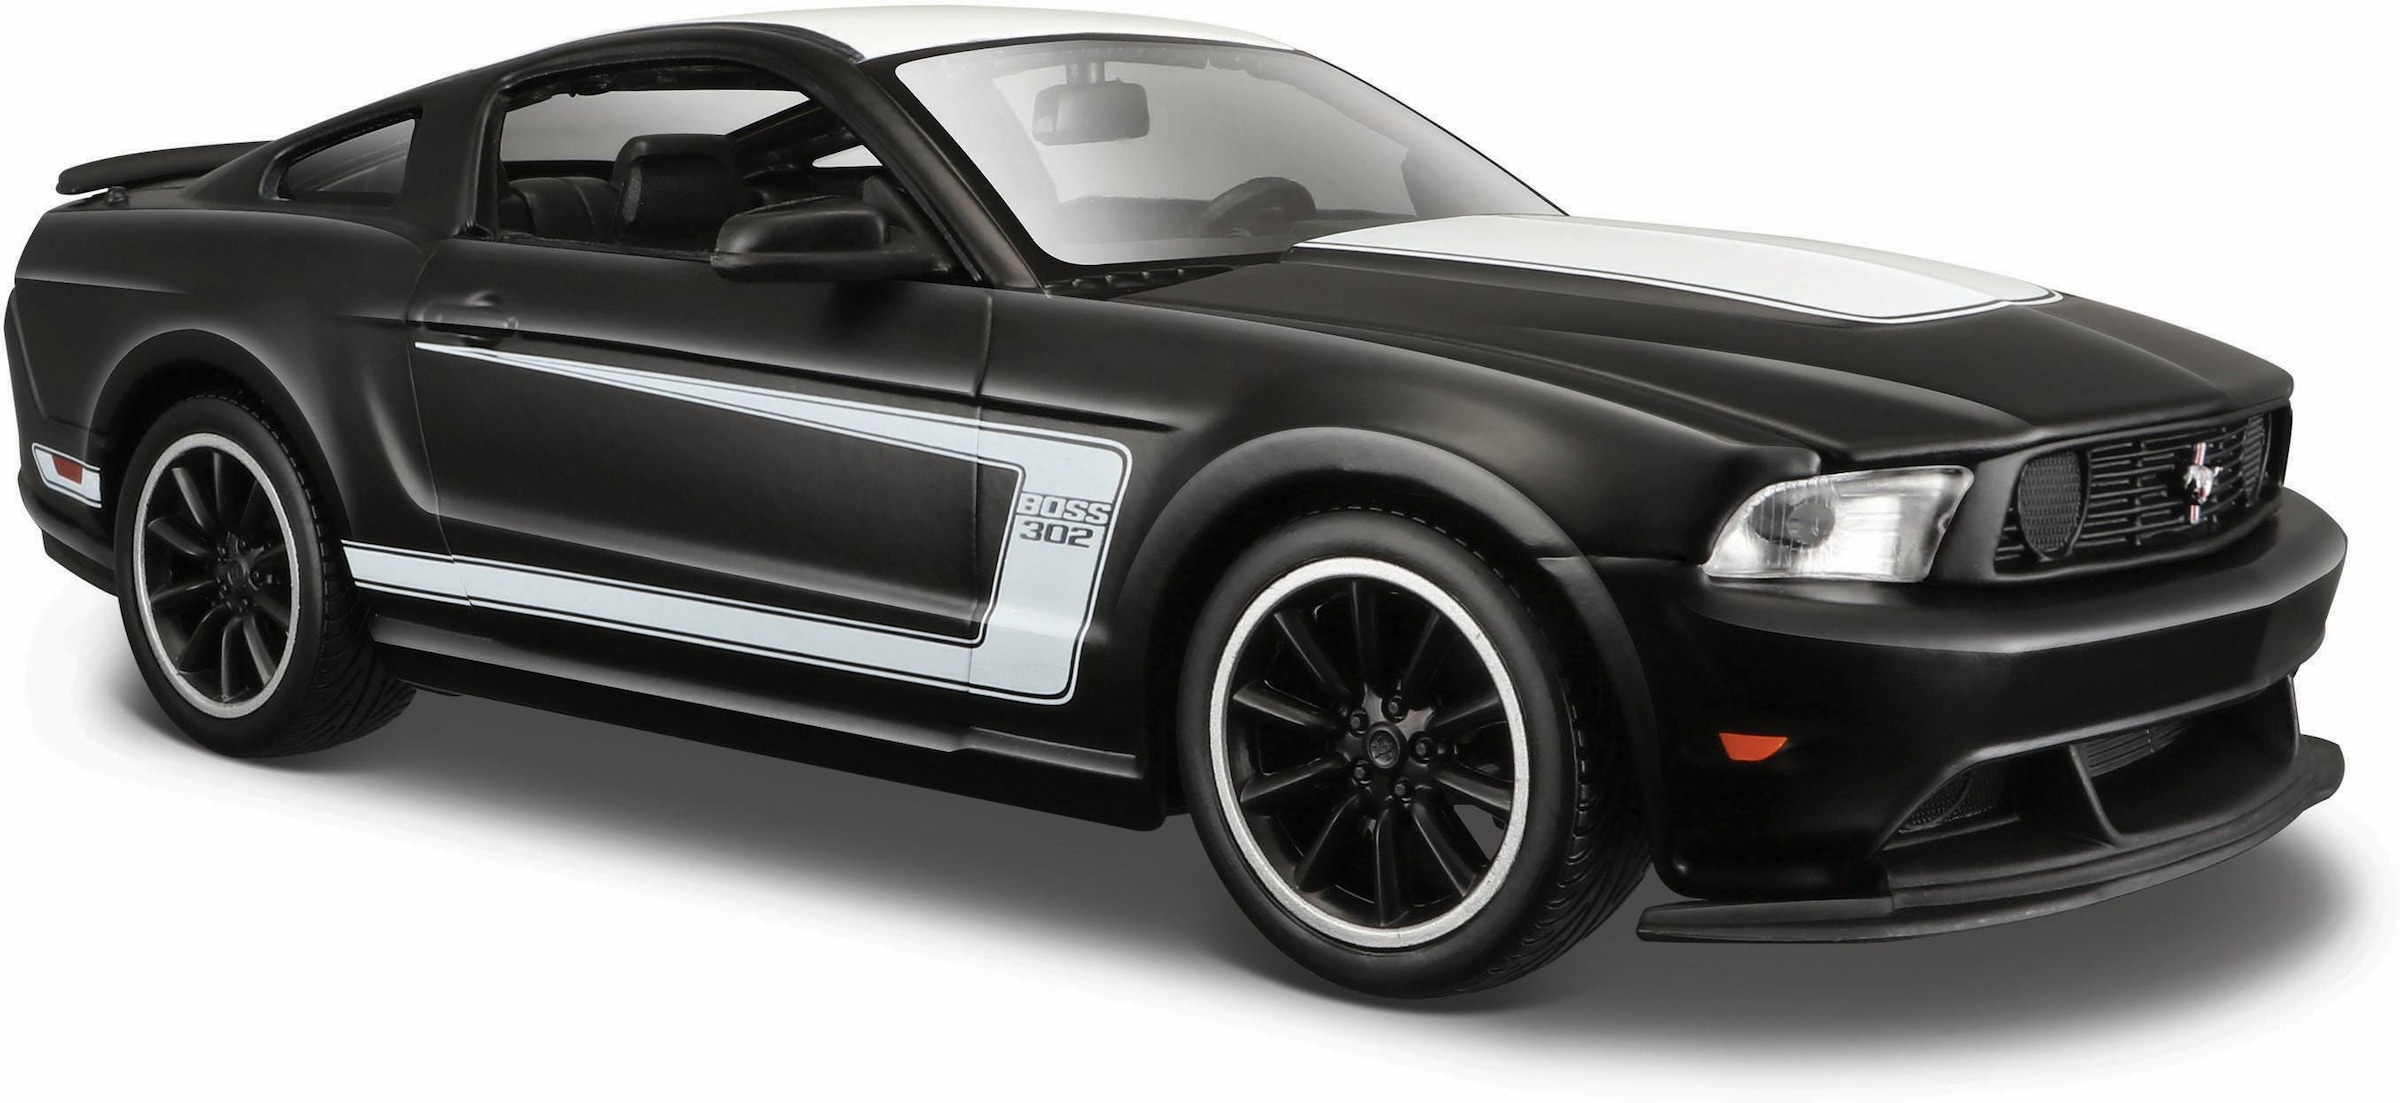 Sammlerauto »Dull Black Collection, Ford Mustang Boss 302, 1:24, schwarz«, 1:24, aus...